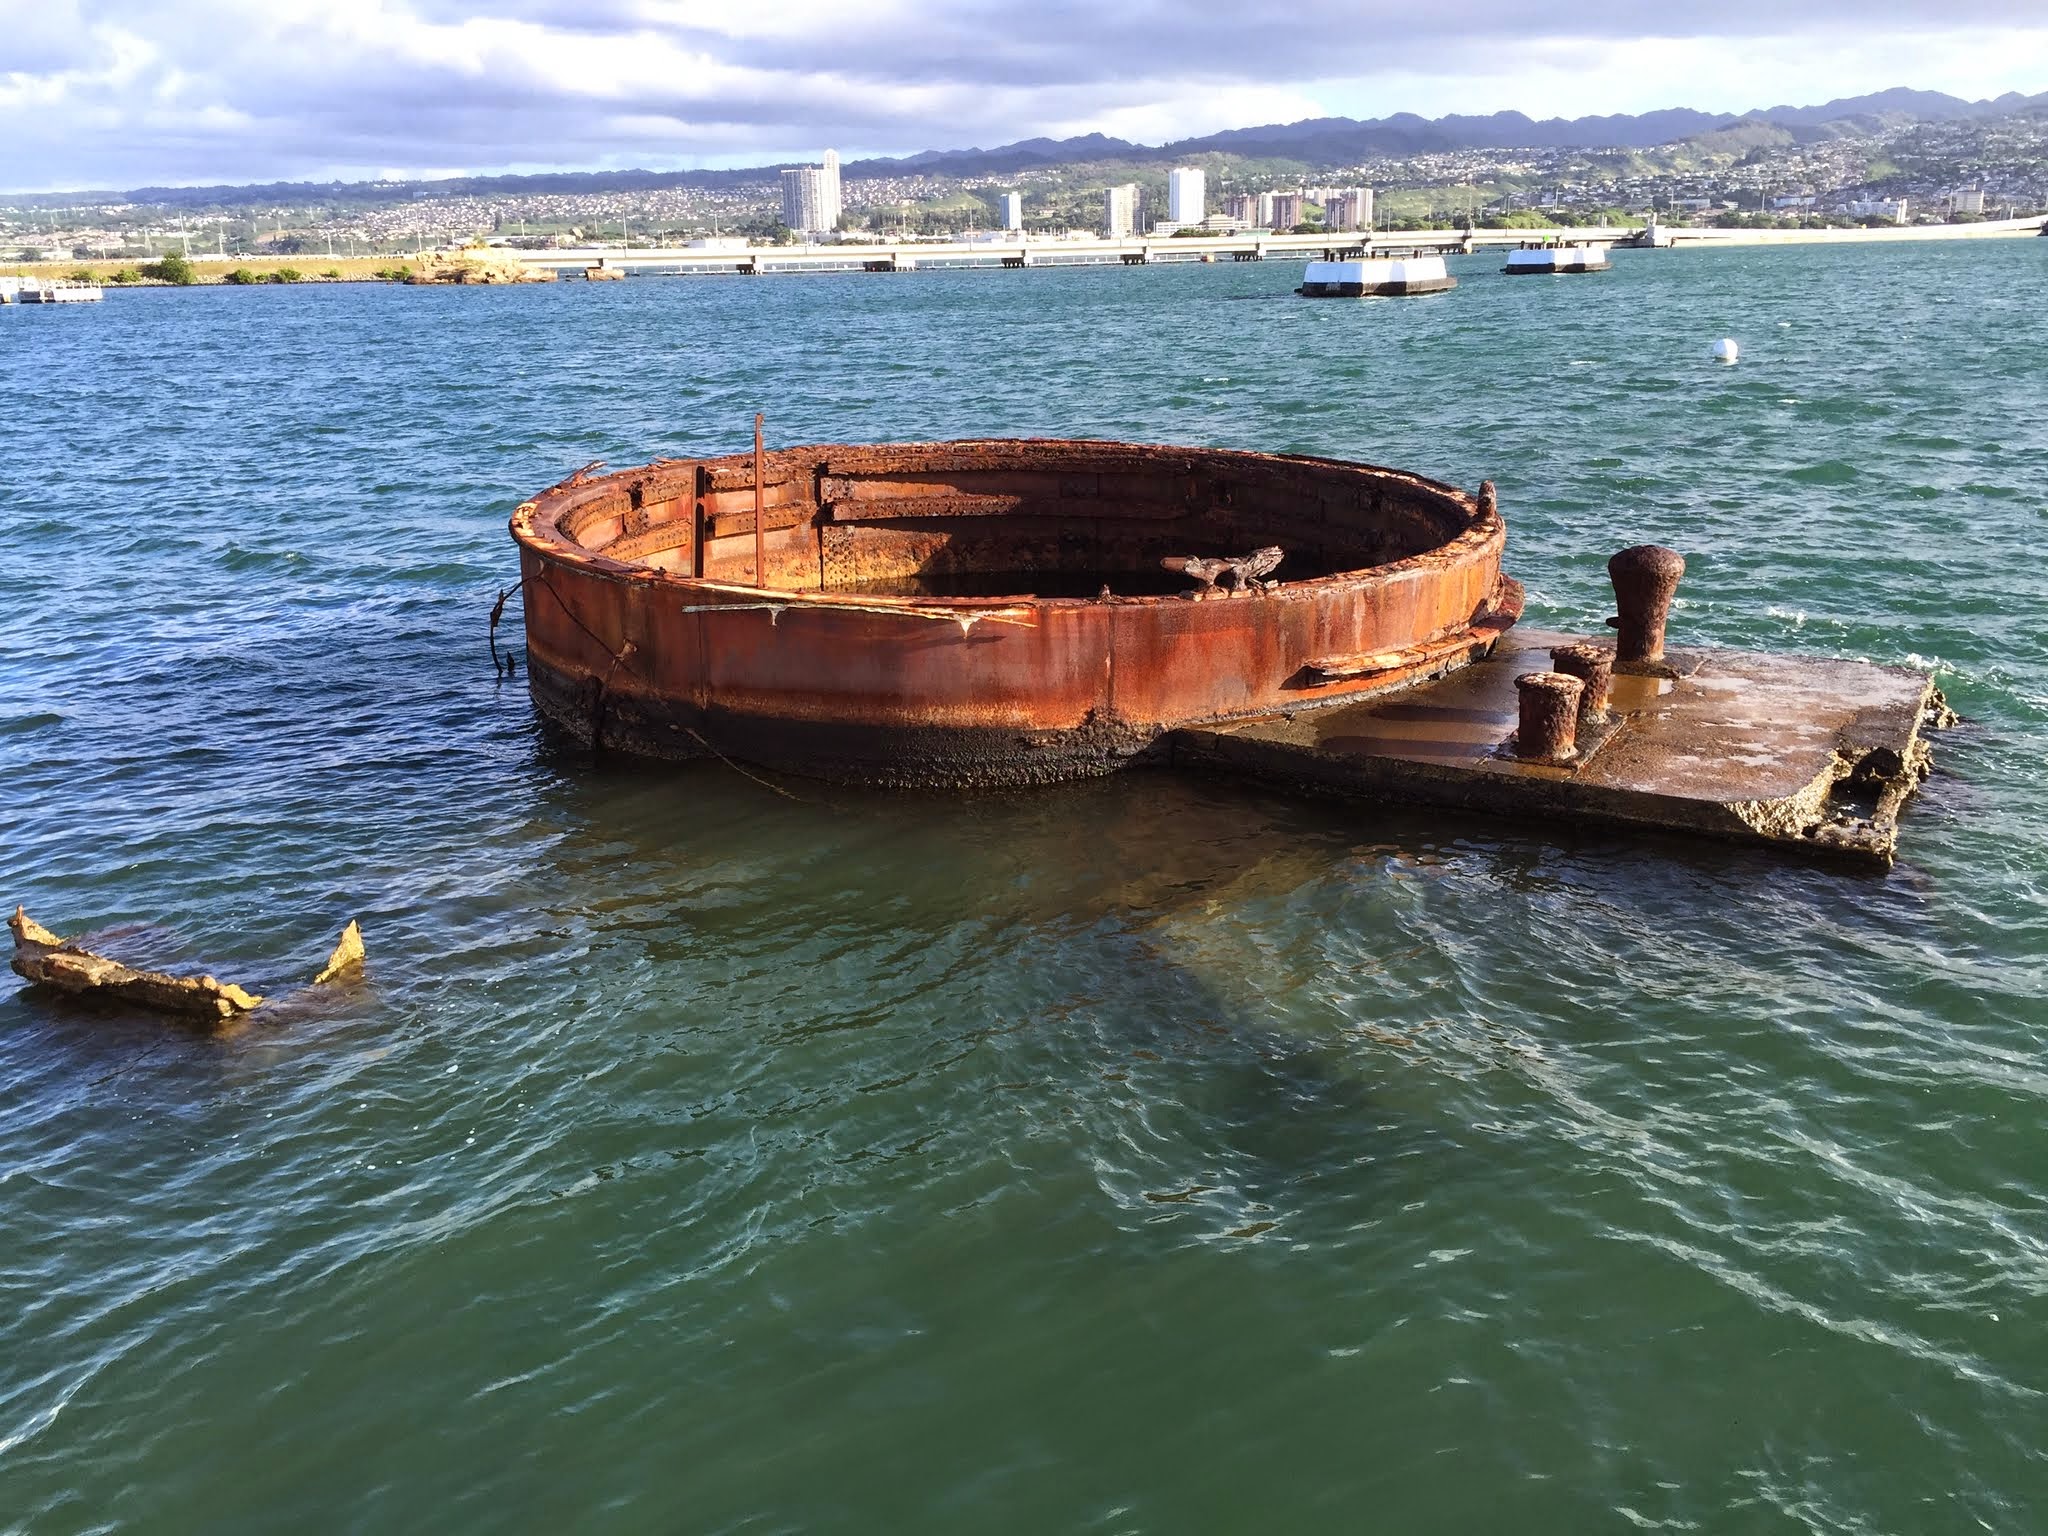 Barbette of Turret No. 3 of the wreck of USS Arizona, Pearl Harbor, Hawaii, United States, 30 Nov 2014